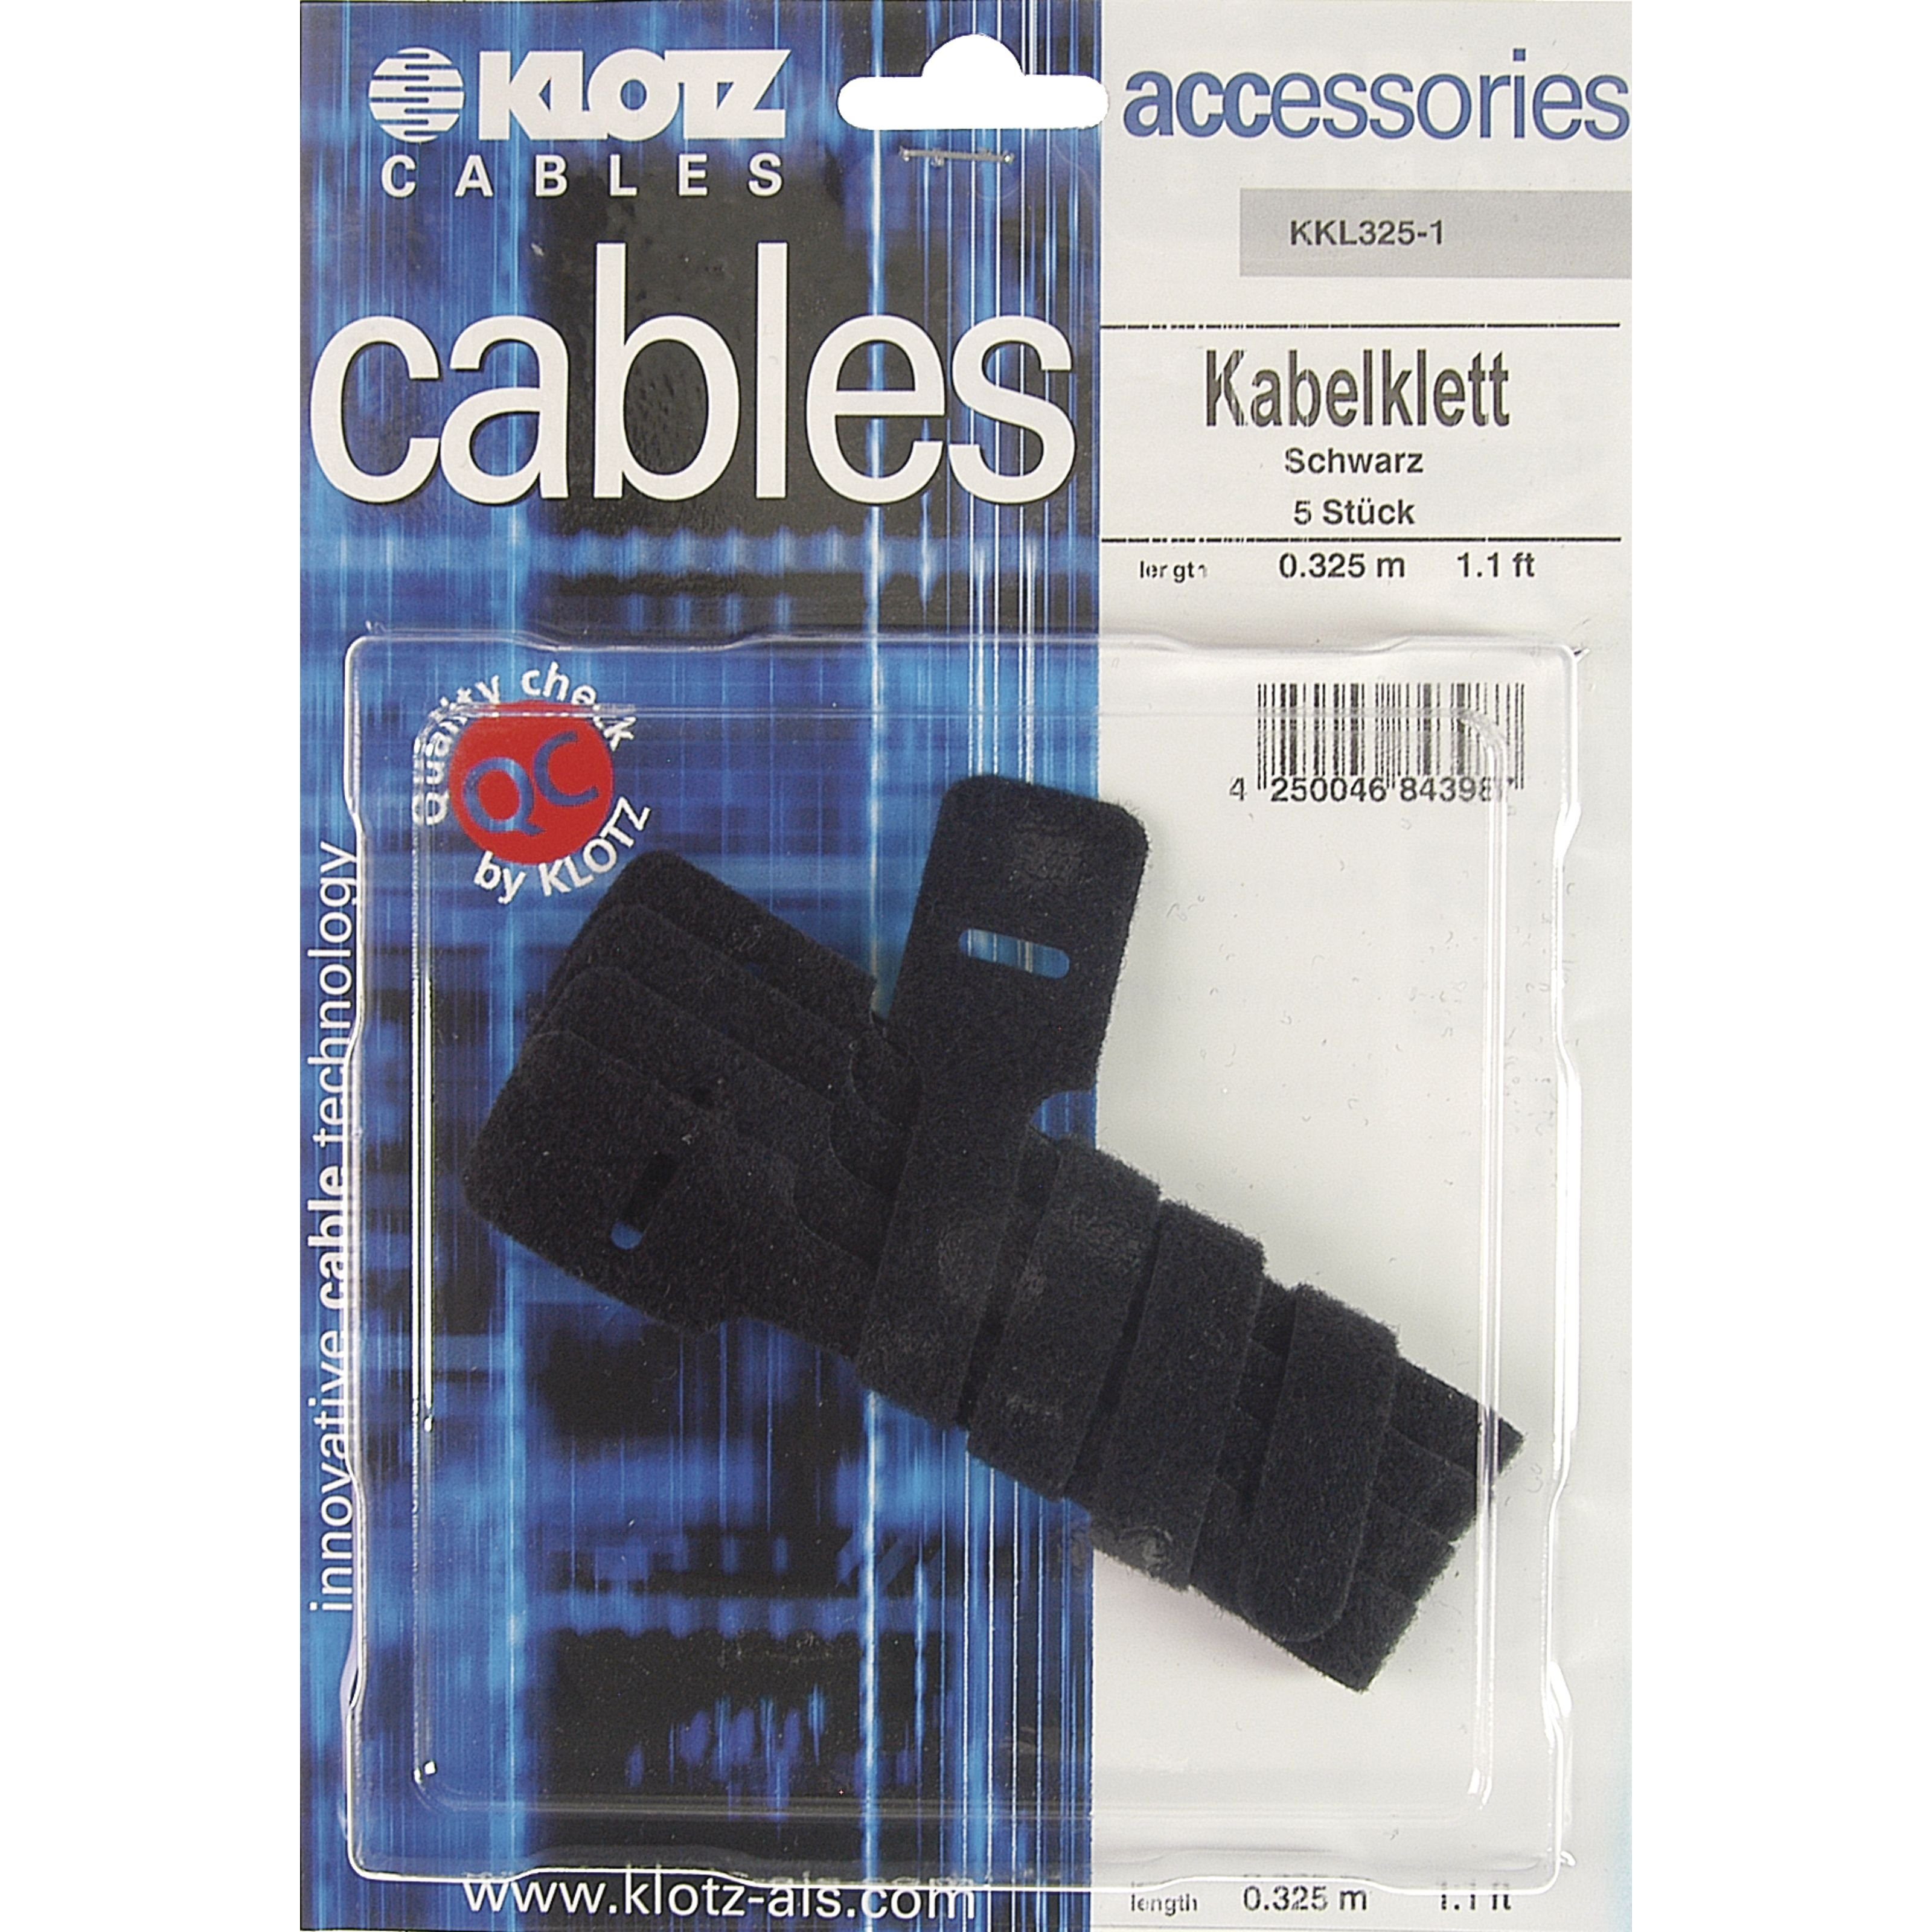 5 Kabelklett Kabelklette Stofföse Klotz - Spielzeug-Musikinstrument, Cables KKL325-1 schwarz, Stück